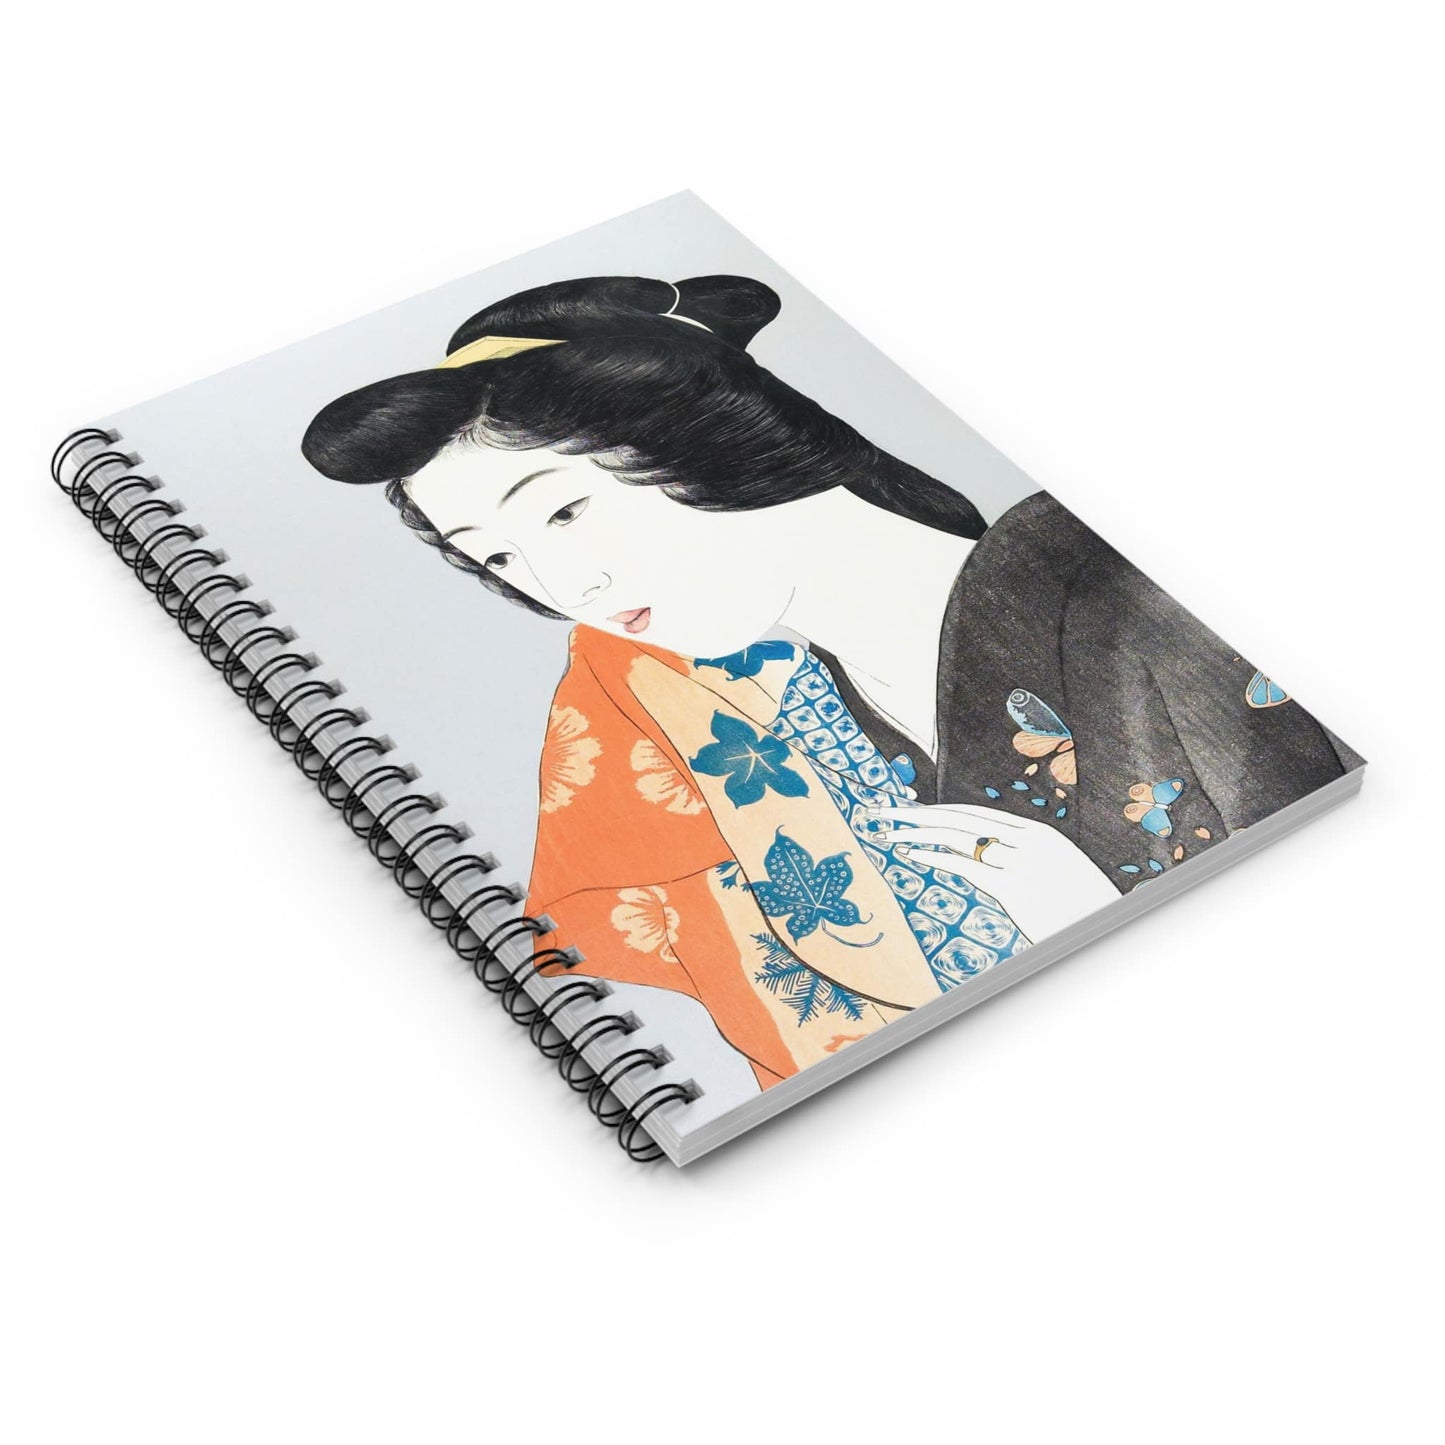 Japanese Fashion Spiral Notebook Laying Flat on White Surface